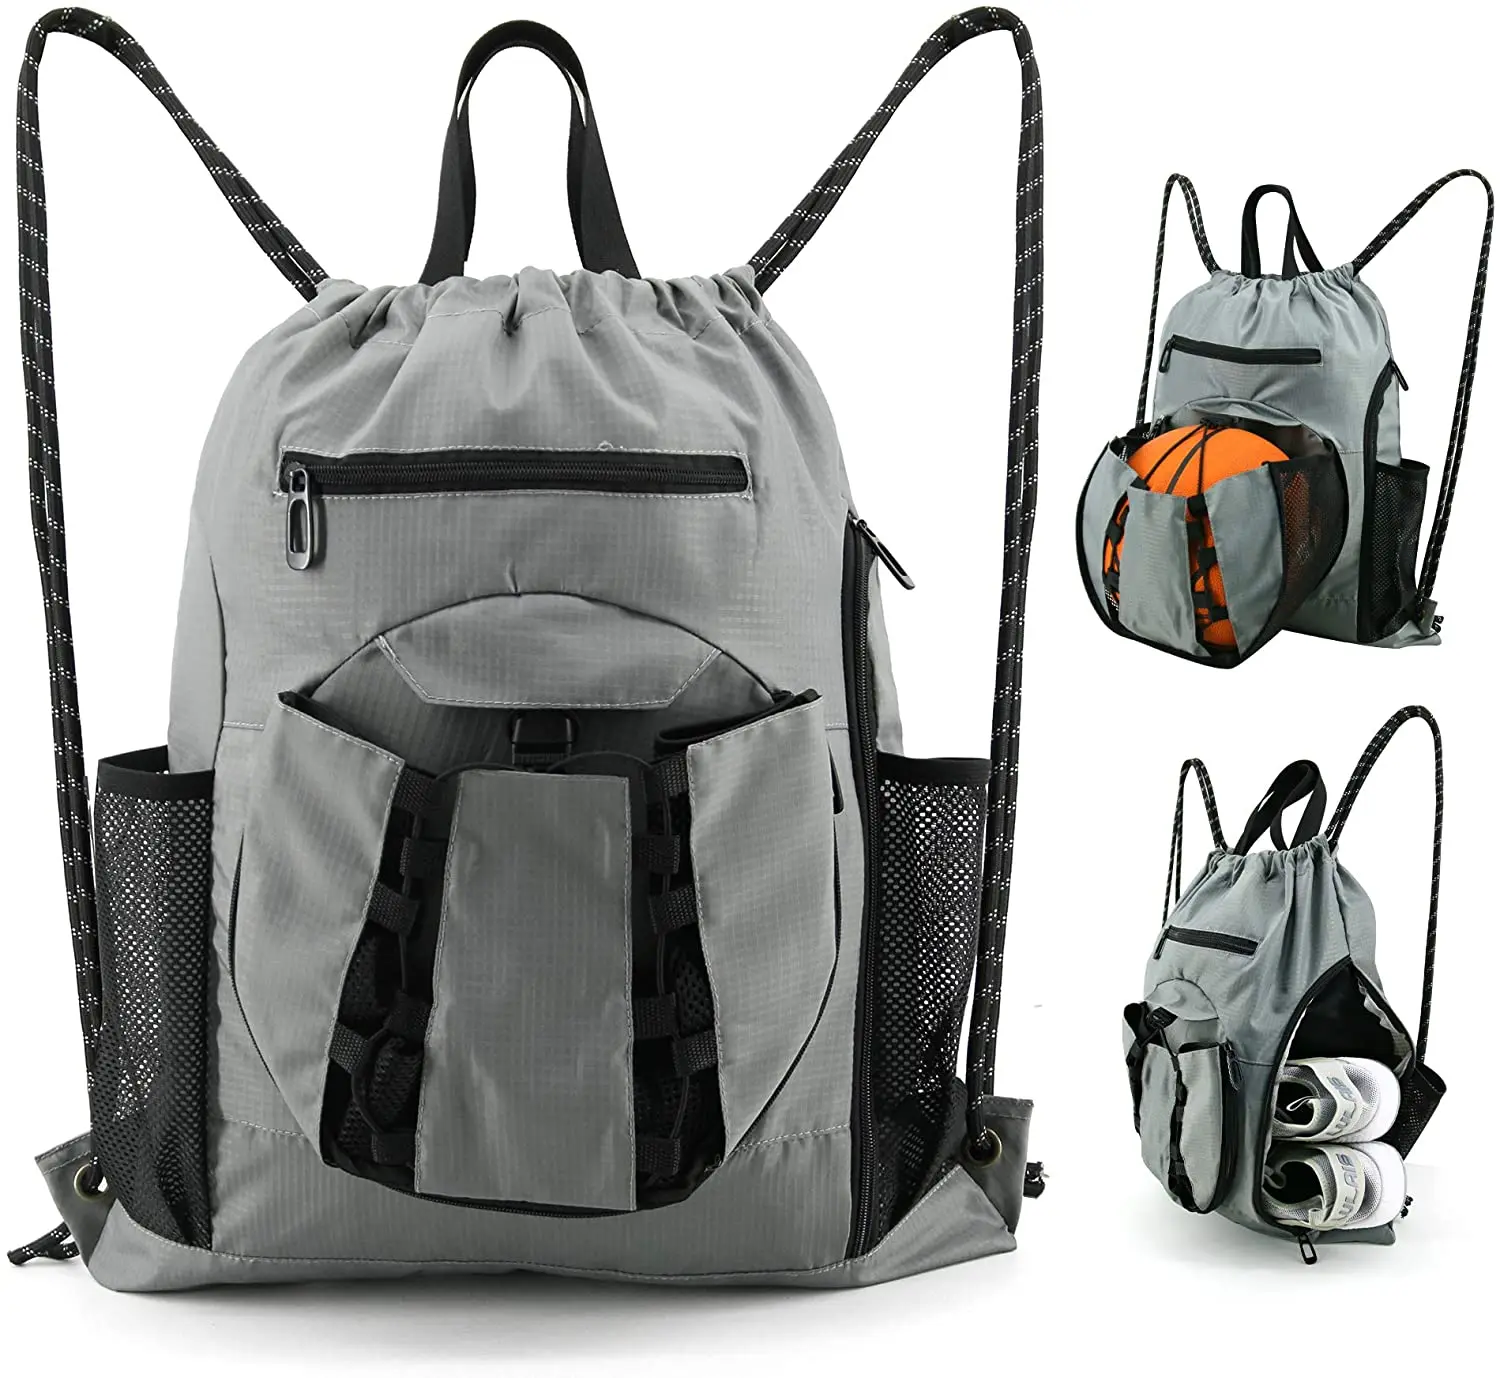 Jialia The Hunny Pot Sport Bag Gym Sack Drawstring Backpack